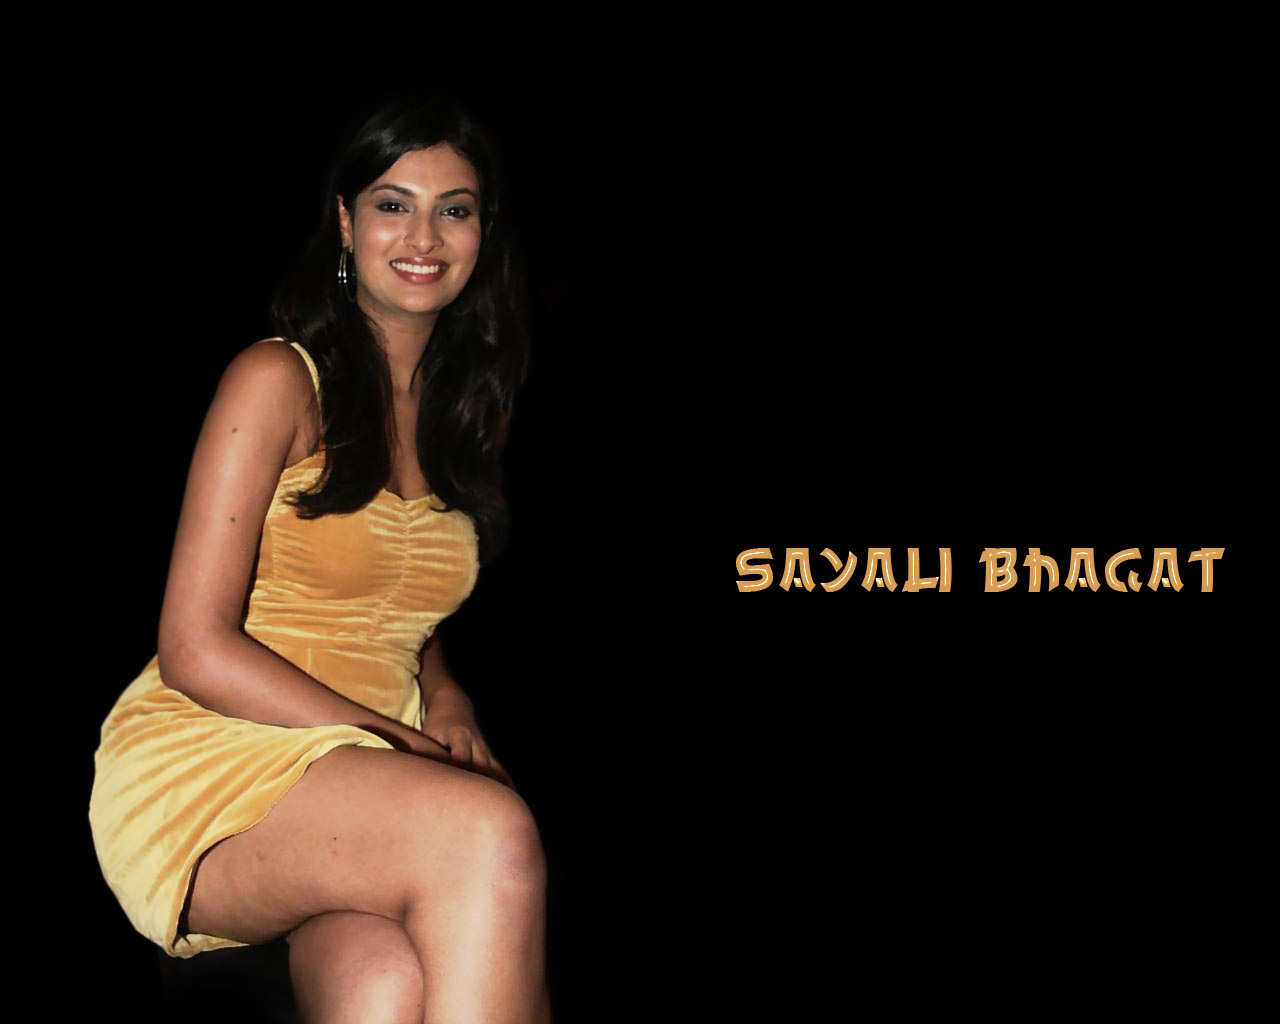 Labels: Hot and Sexy Sayali Bhagat Wallpaper